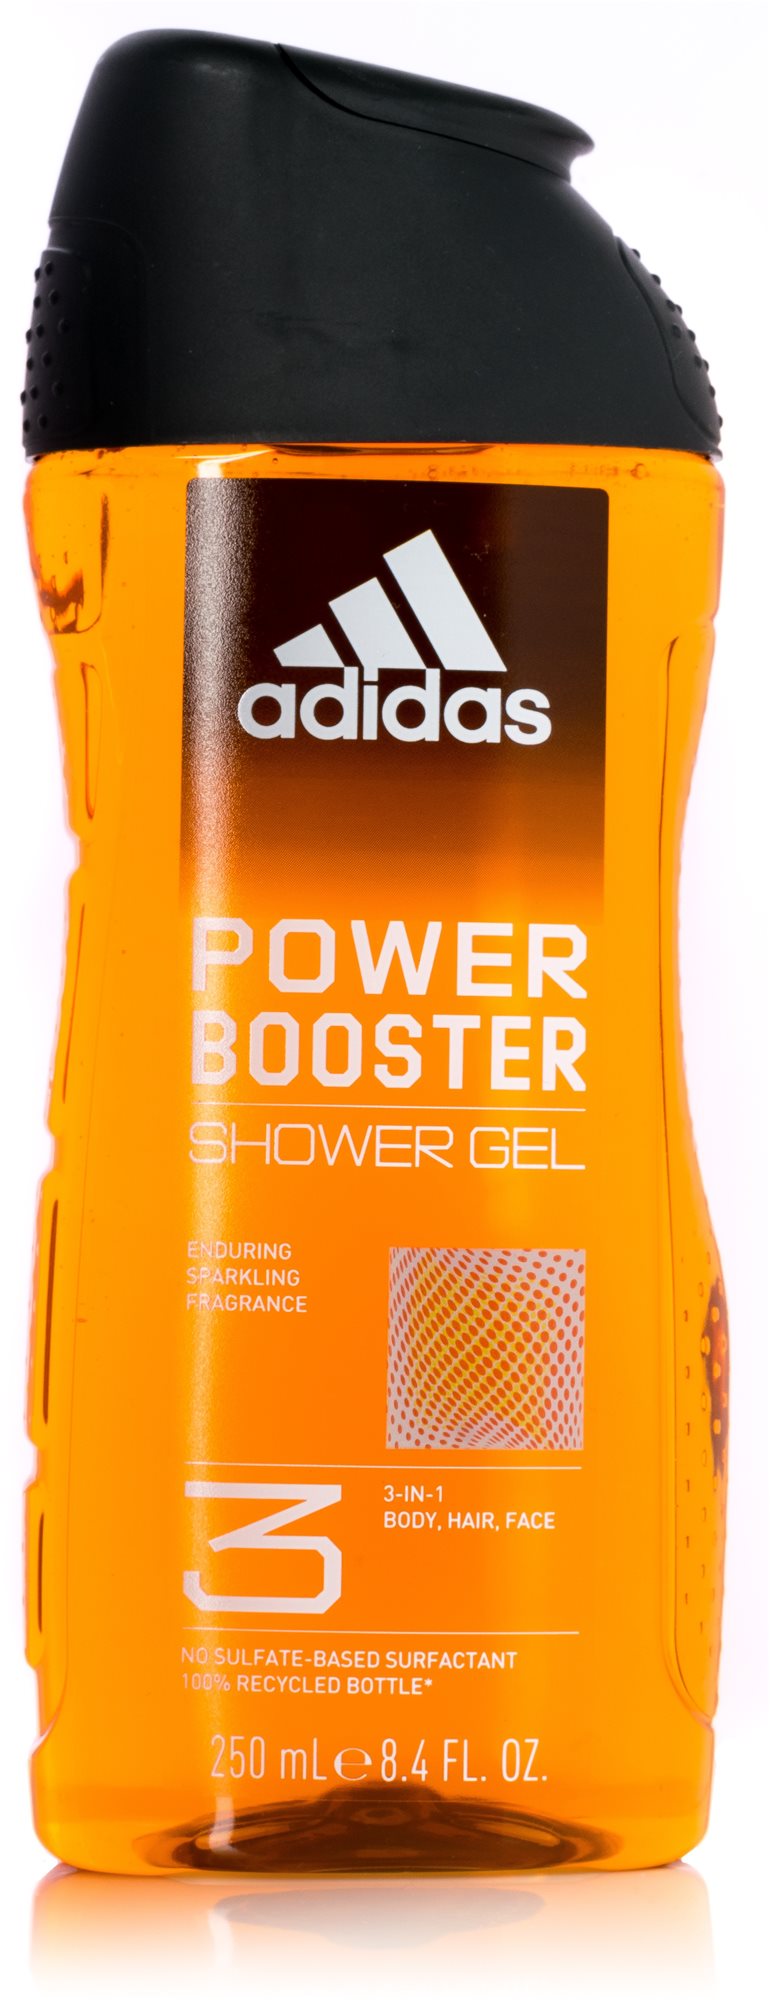 ADIDAS Power Booster Shower Gel 3in1 250 ml